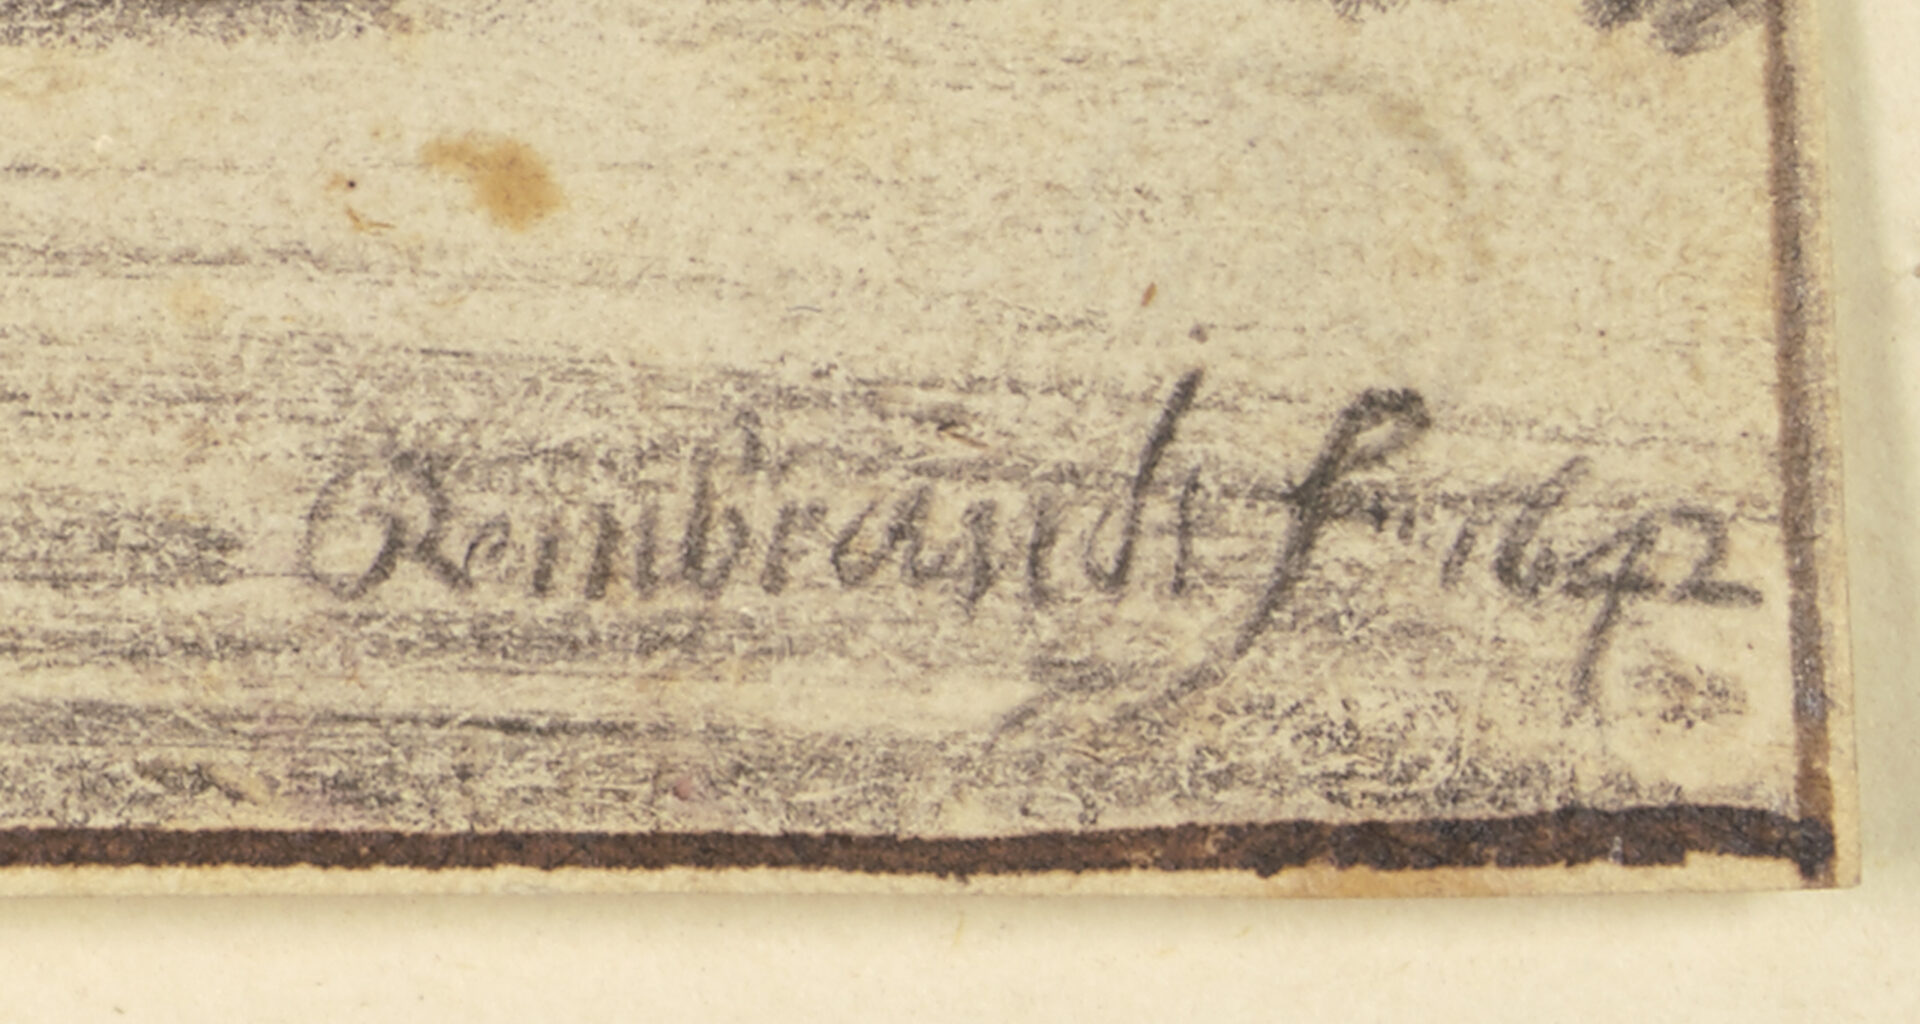 Abb. 2 Rembrandt (), Fantasielandschaft, Signatur „Rembrandt f. (=fecit, lat. hat es gemacht) 1642“